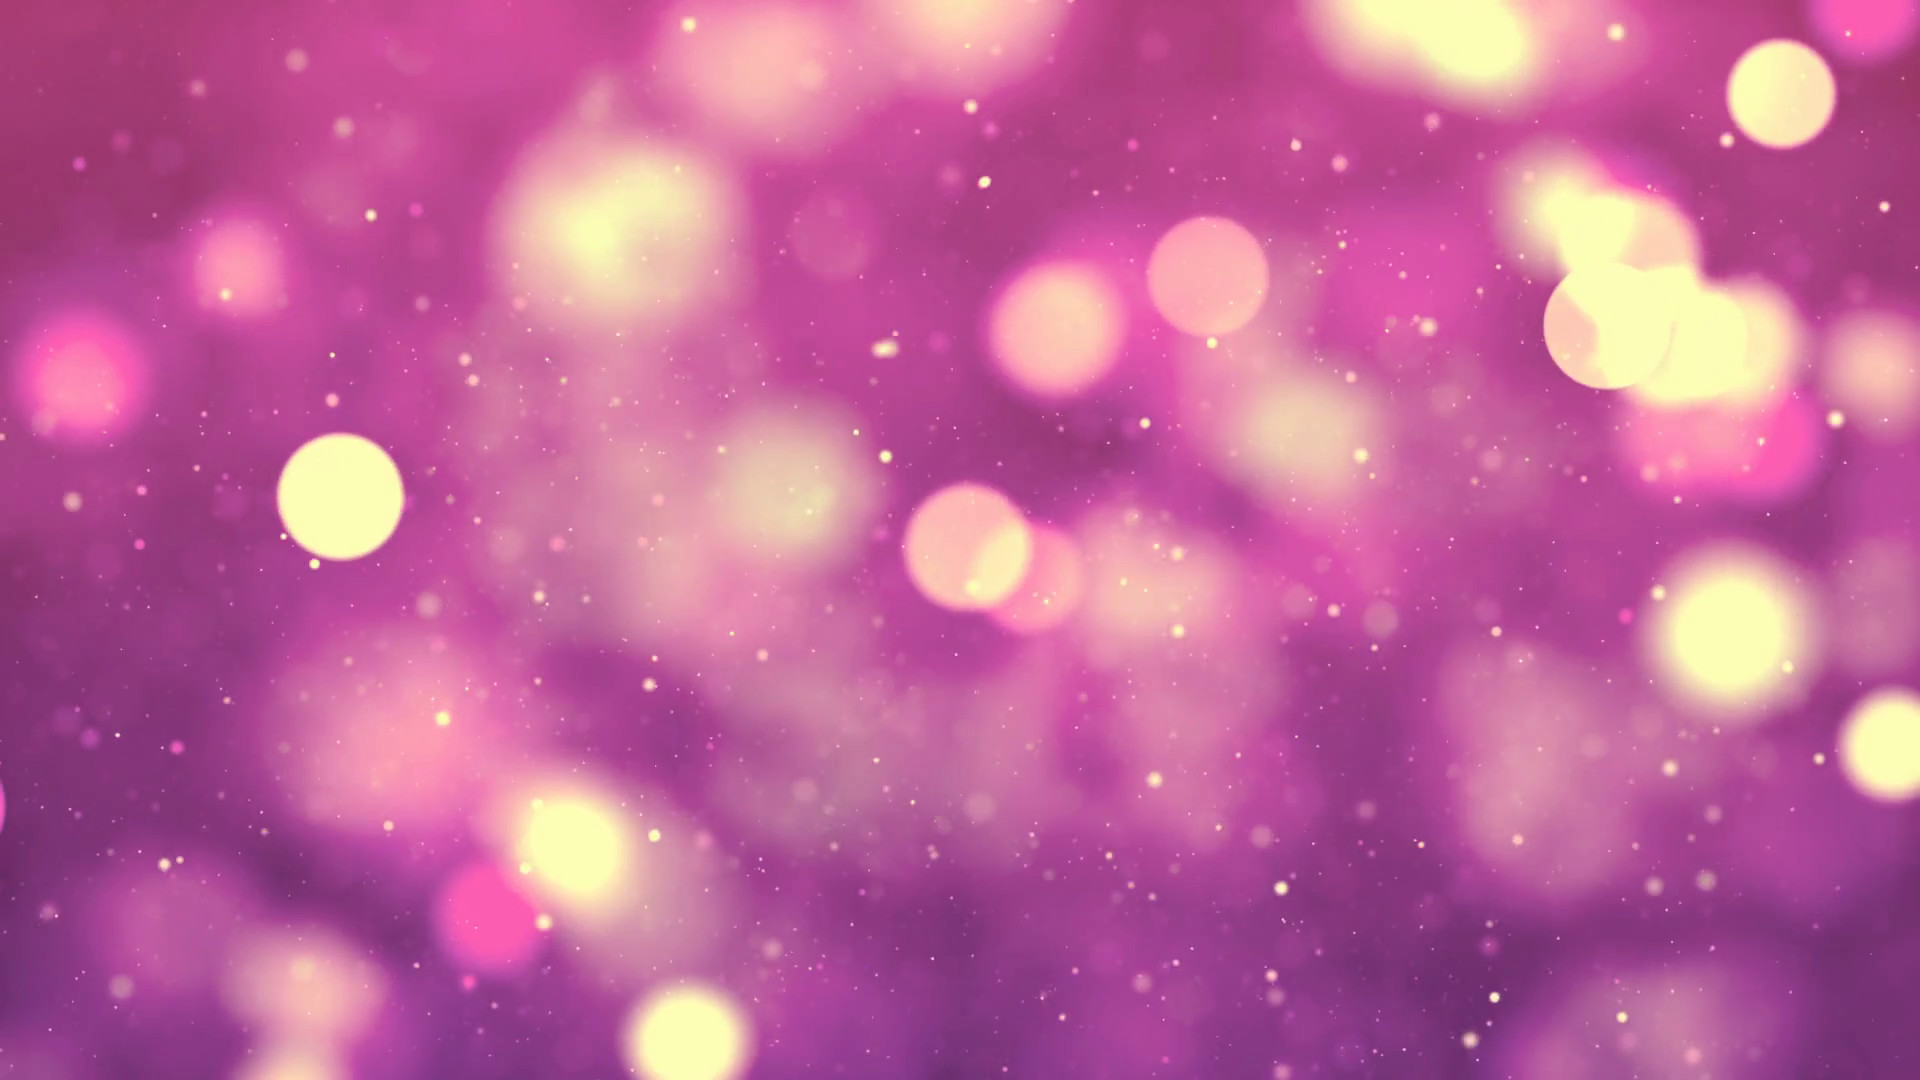 1920x1080 Pink glitter background with nice bokeh Motion Background - VideoBlocks